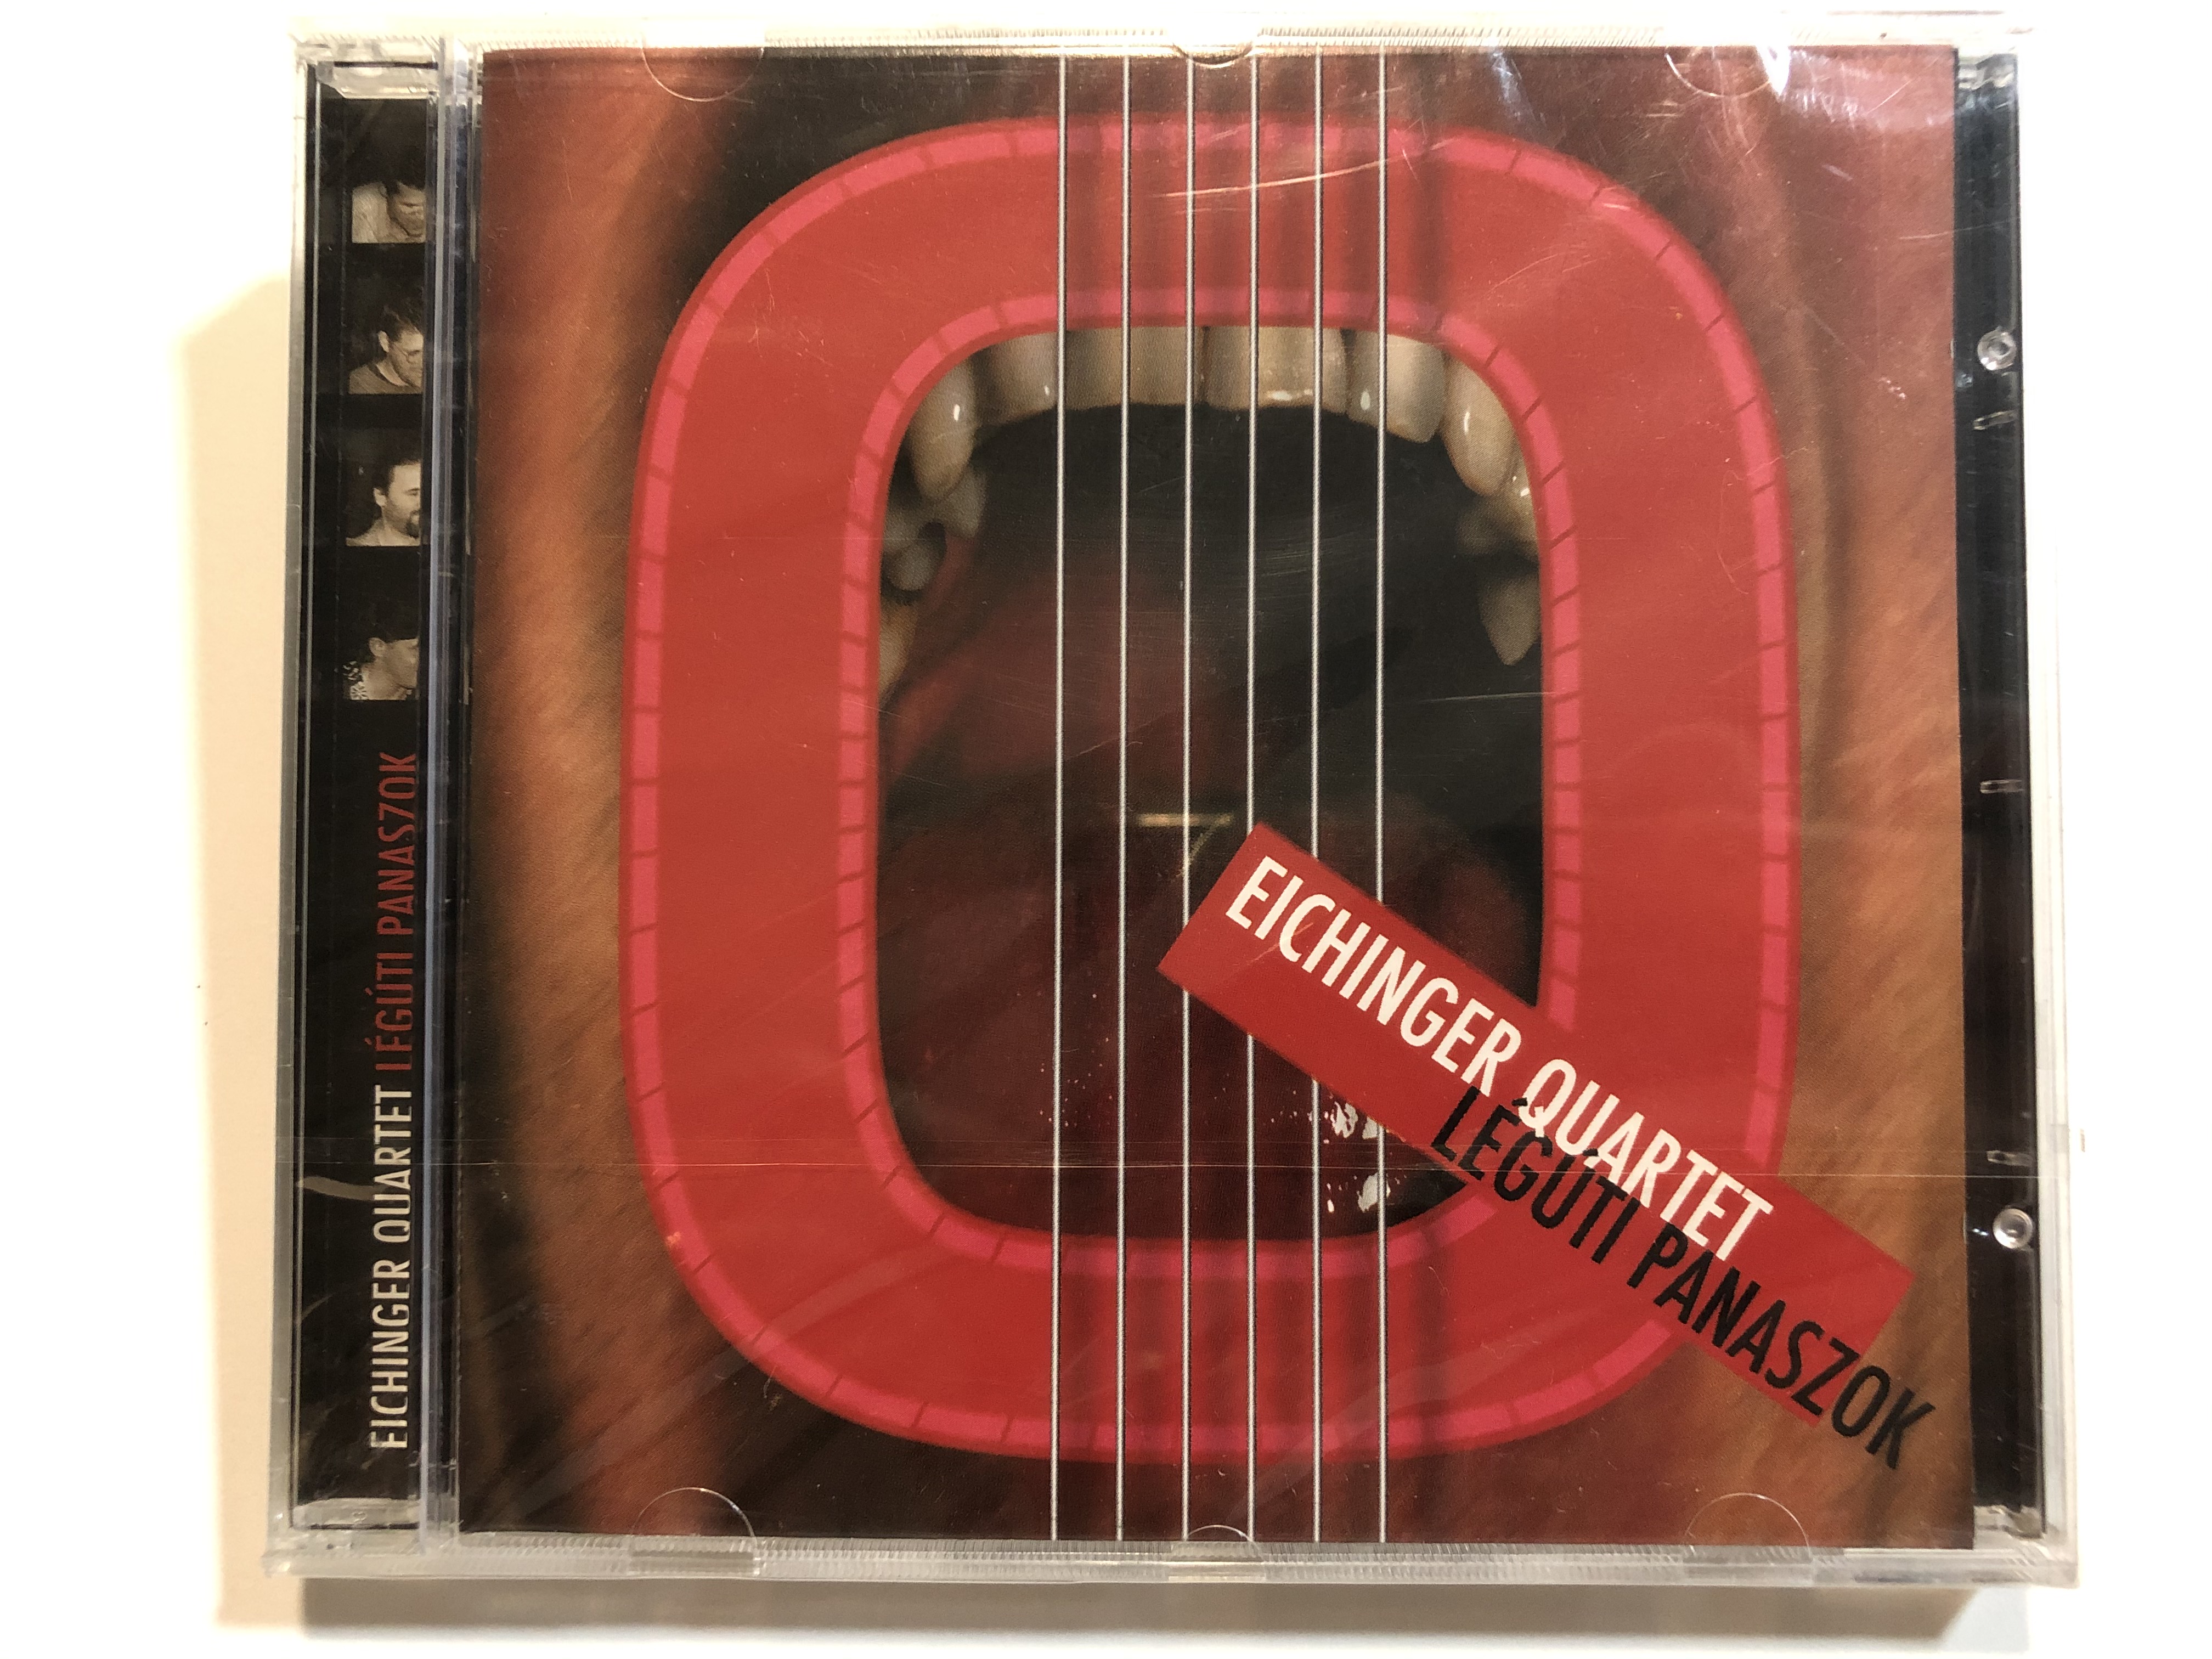 eichinger-quartet-l-g-ti-panaszok-bahia-audio-cd-2001-cdb-085-1-.jpg